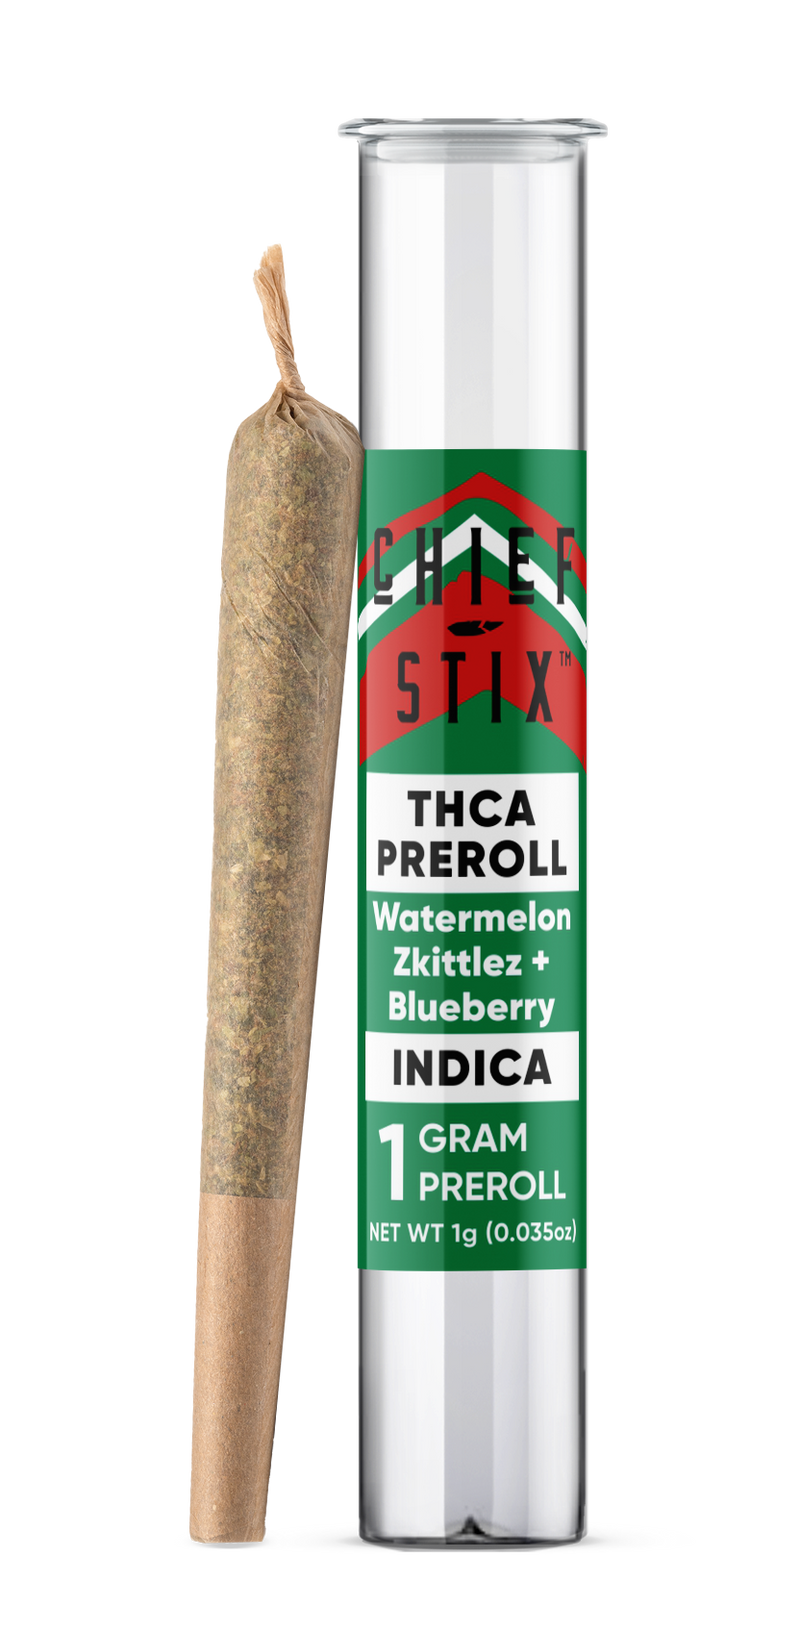 Chief Stix THCA 1 gram Preroll - Indica - Watermelon Zkittlez + Blueberry